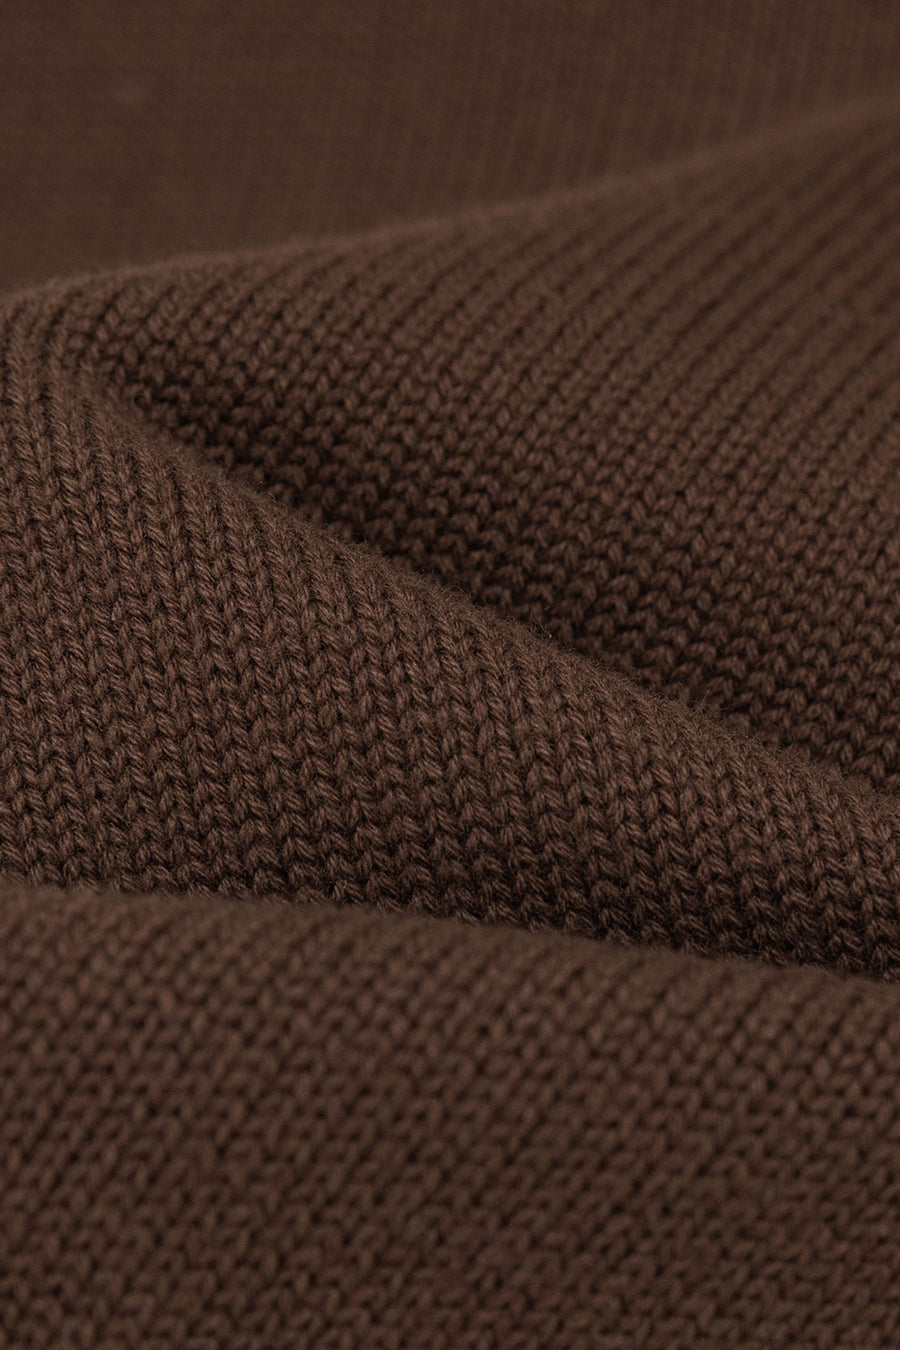 Collar Line Knit Sweater